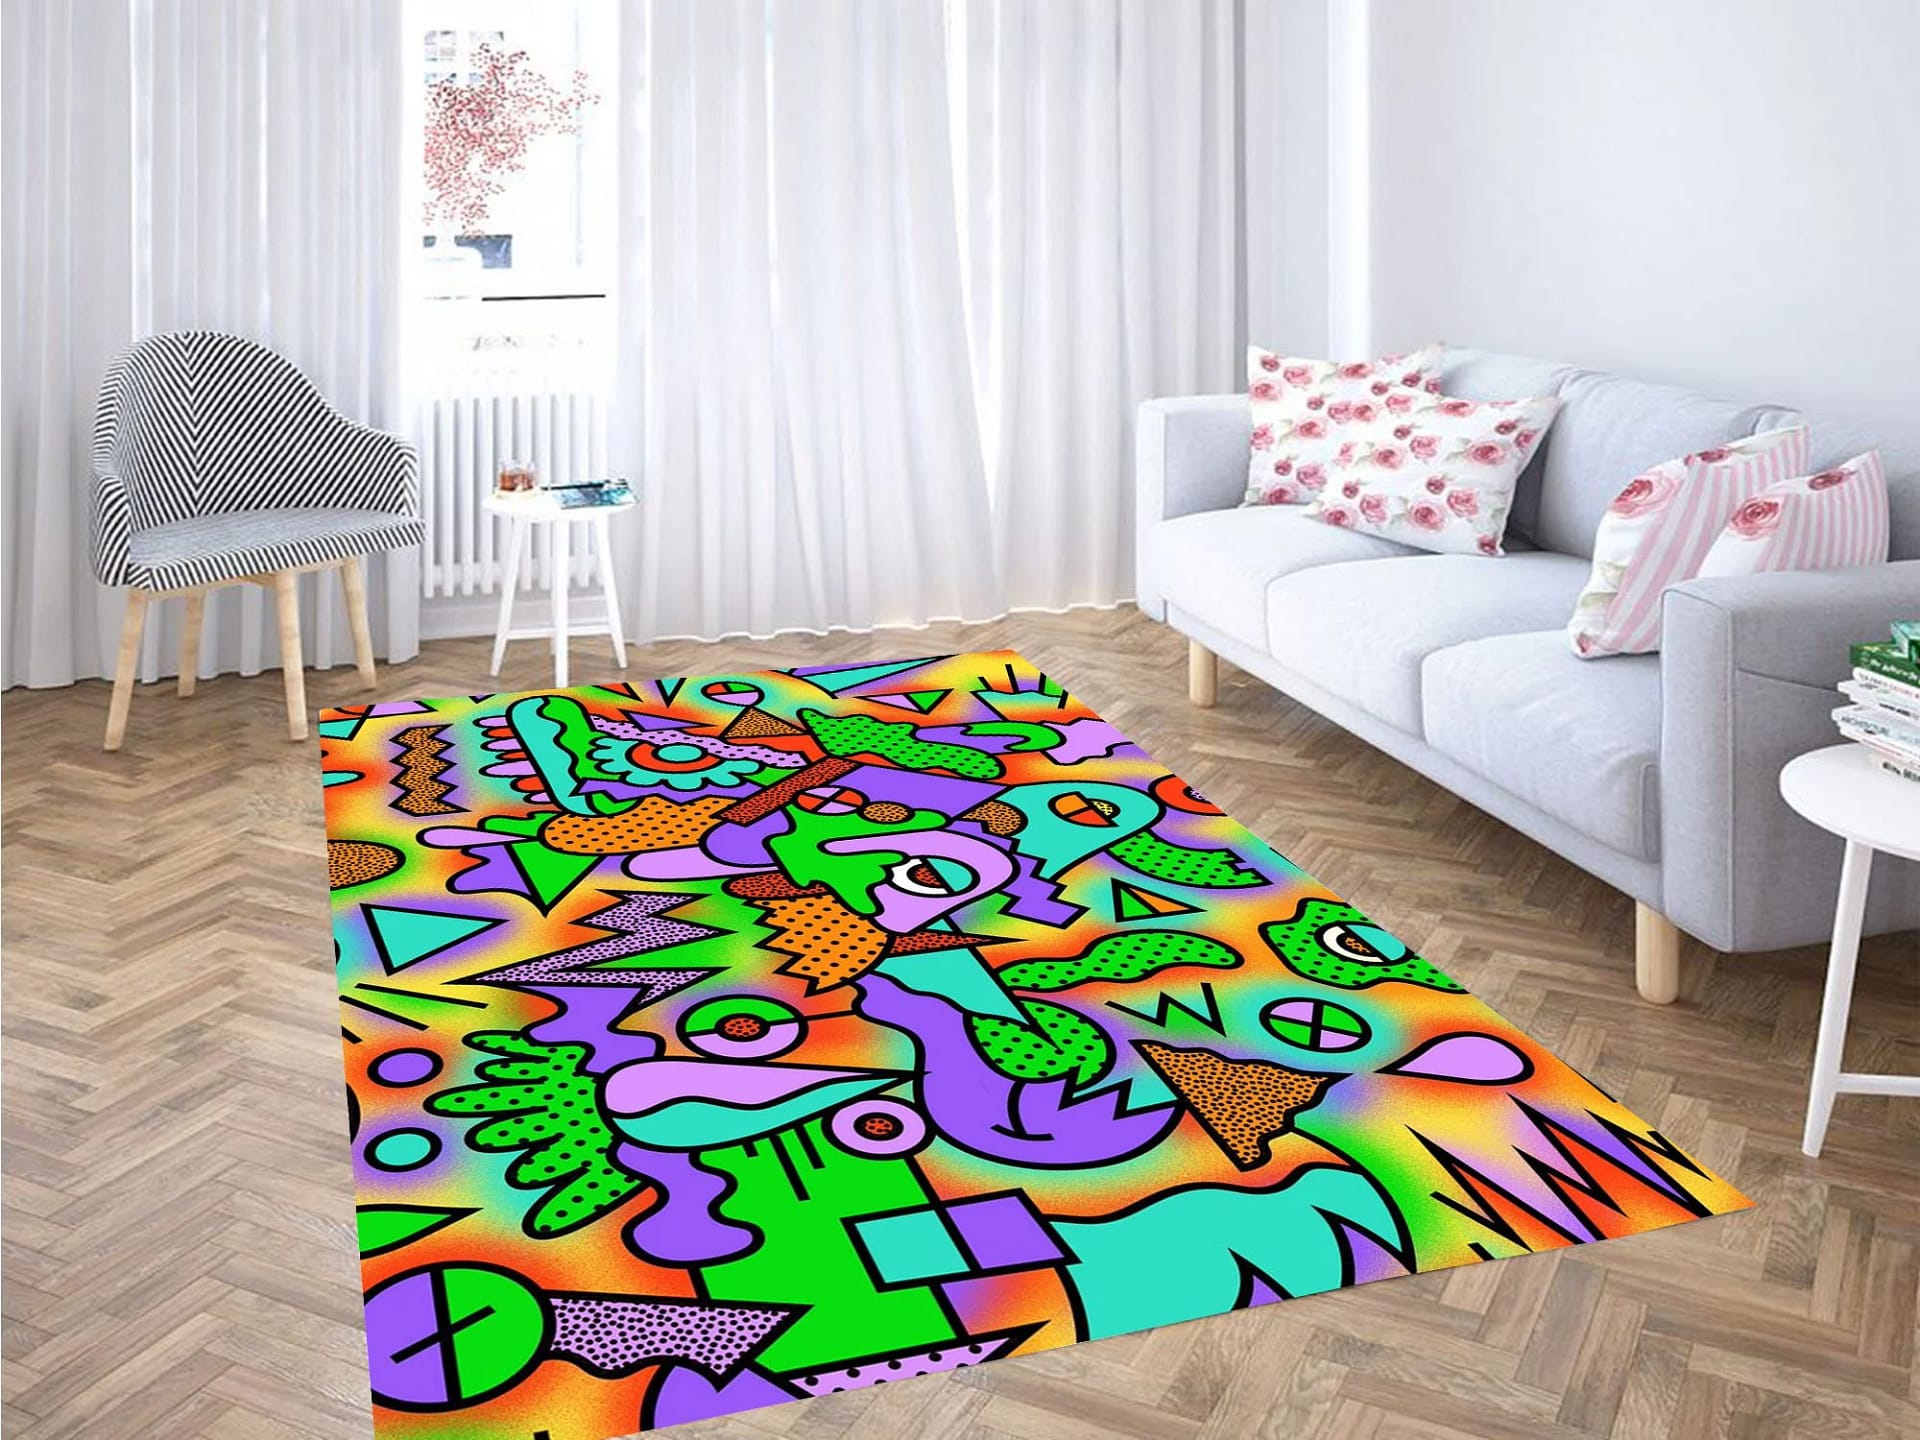 Tone Cartoon Network Pattern Carpet Rug